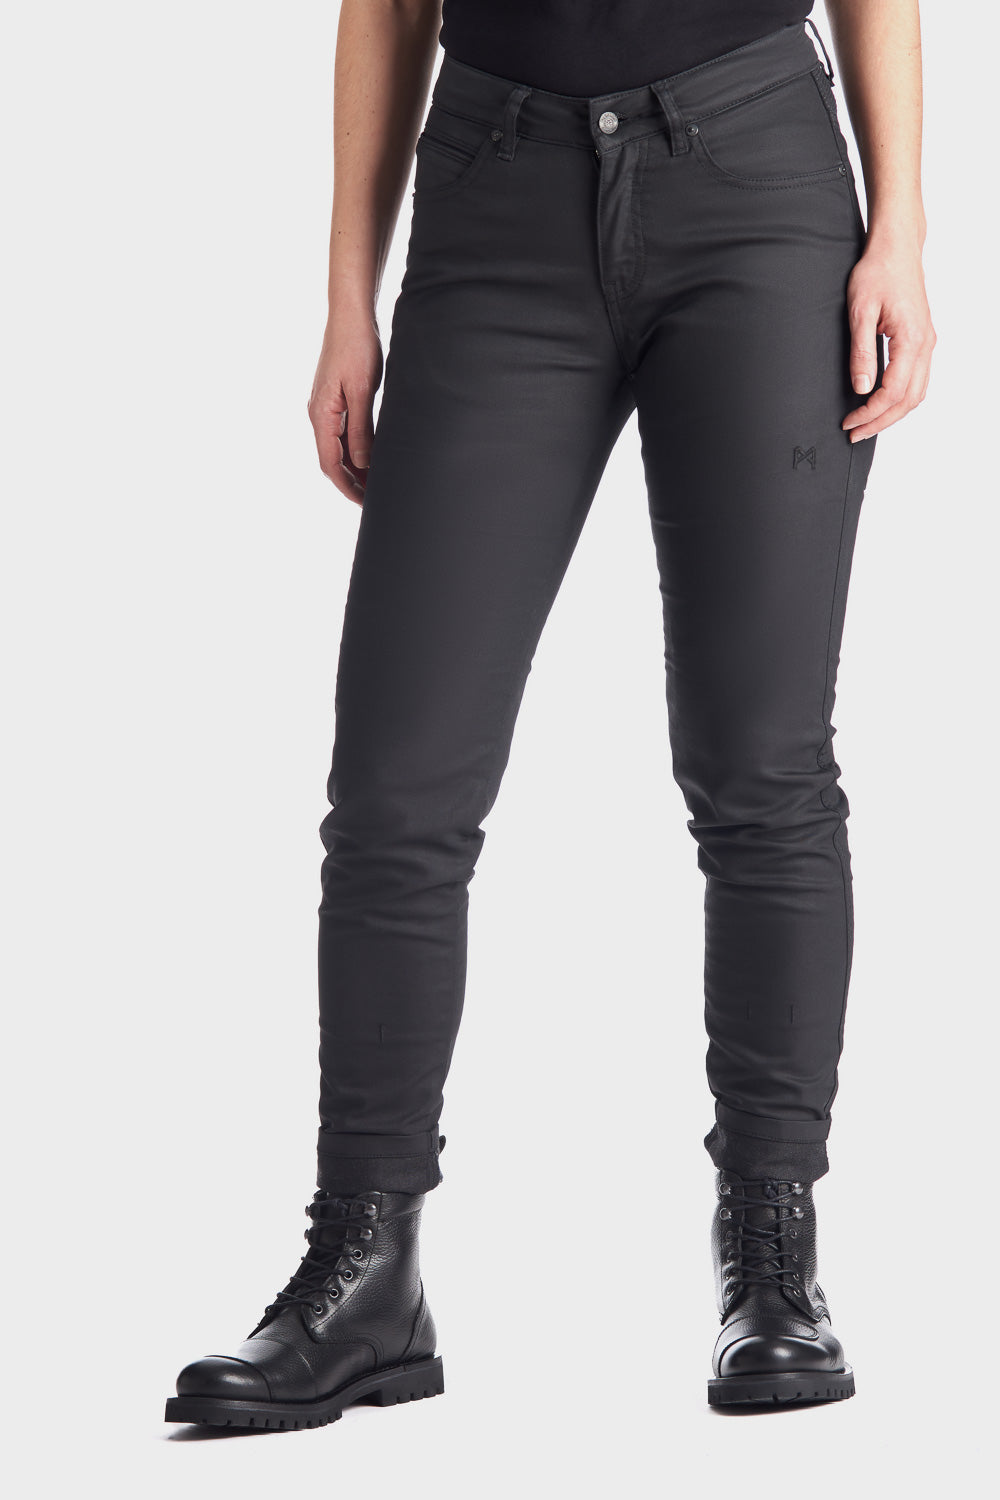 woman's legs wearing slim-fit motorcycle jeans from Pando Moto 